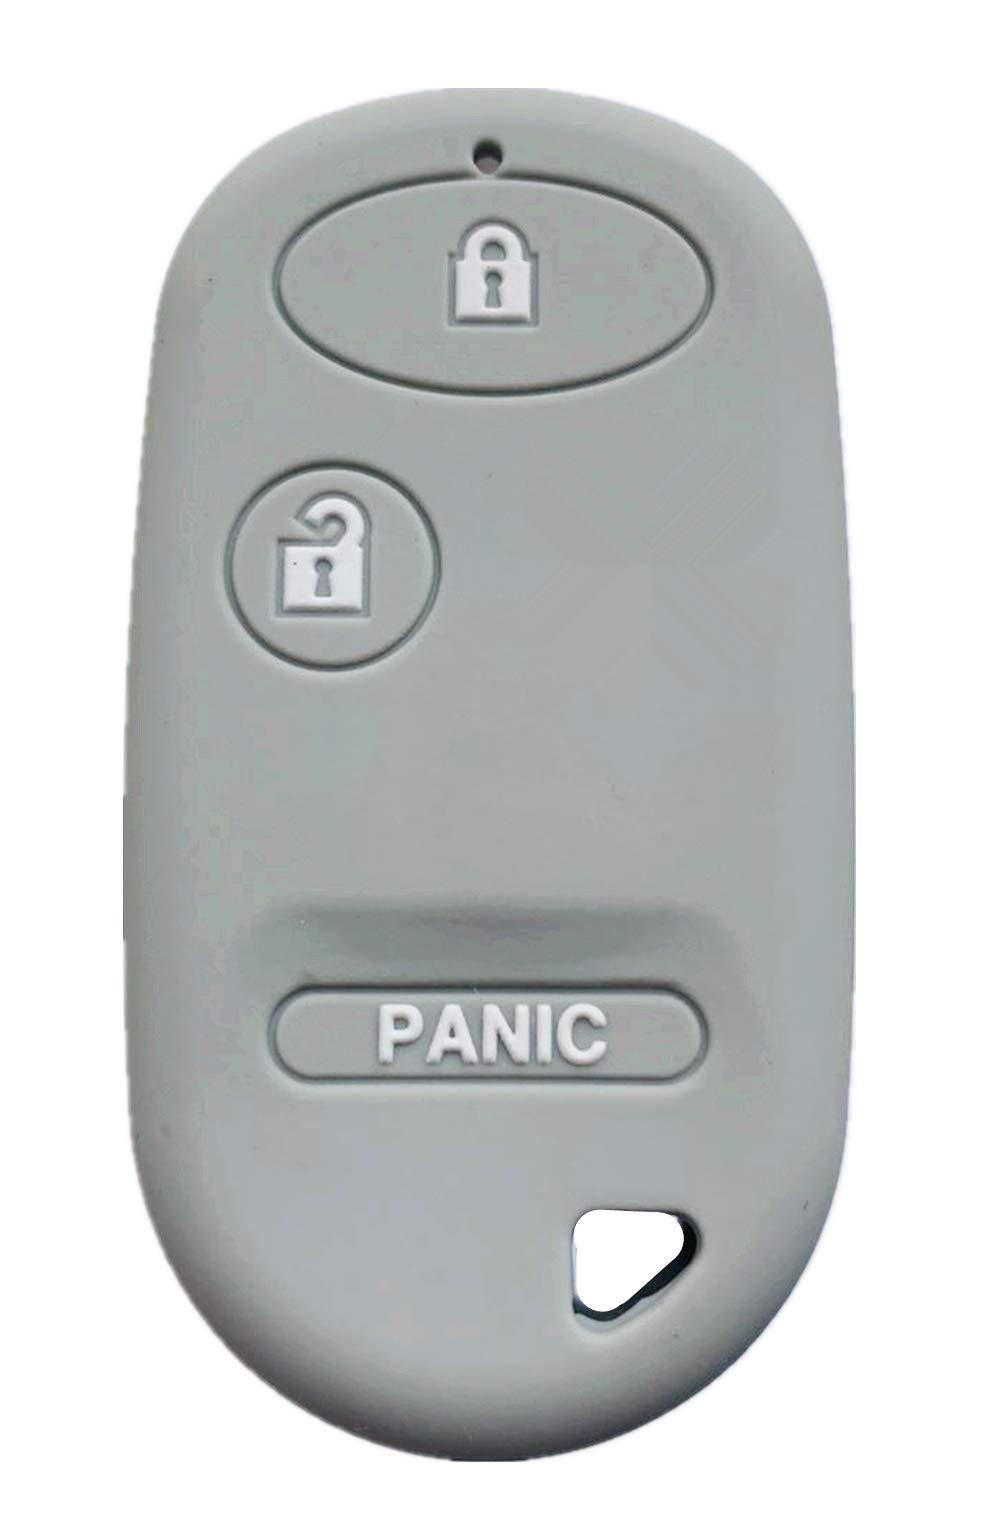  [AUSTRALIA] - RPKEY Silicone Keyless Entry Remote Control Key Fob Cover Case Protector for Honda Accord Element Civic Pilot 72147-S5A-A01 NHVWB1U523 NHVWB1U521 A269ZUA106 72147-S04-A01(Gray)